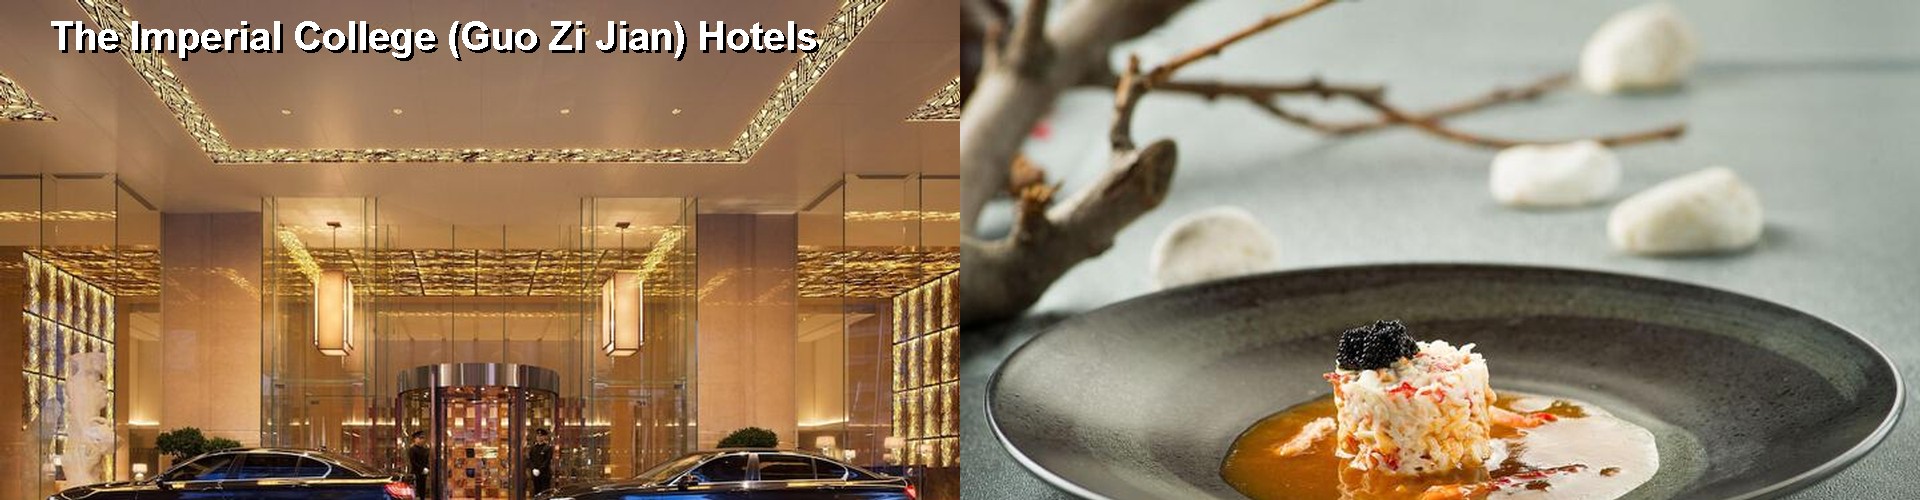 4 Best Hotels near The Imperial College (Guo Zi Jian)